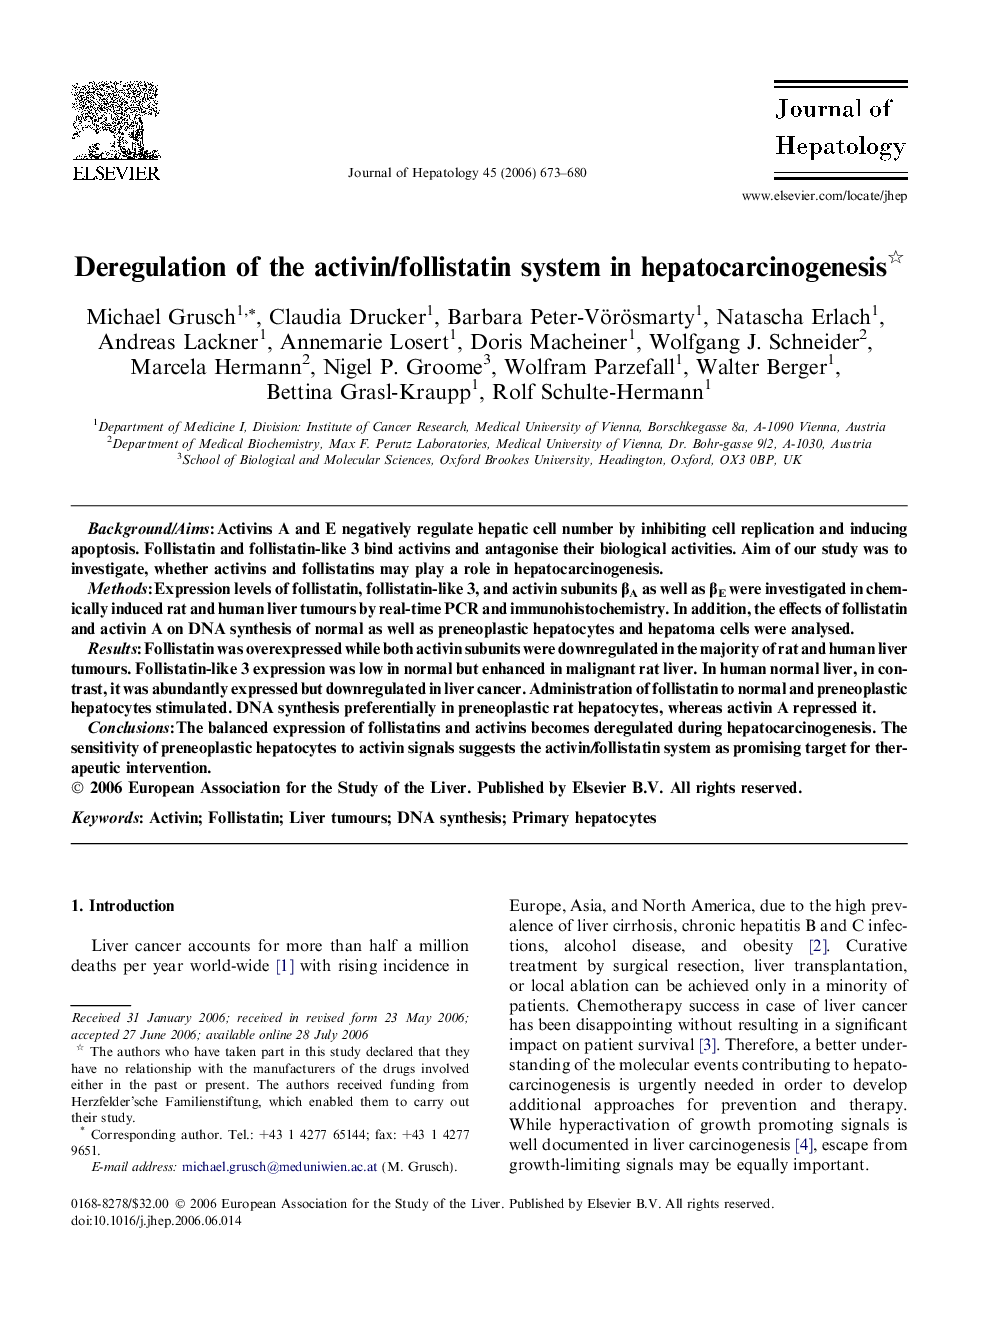 Deregulation of the activin/follistatin system in hepatocarcinogenesis 